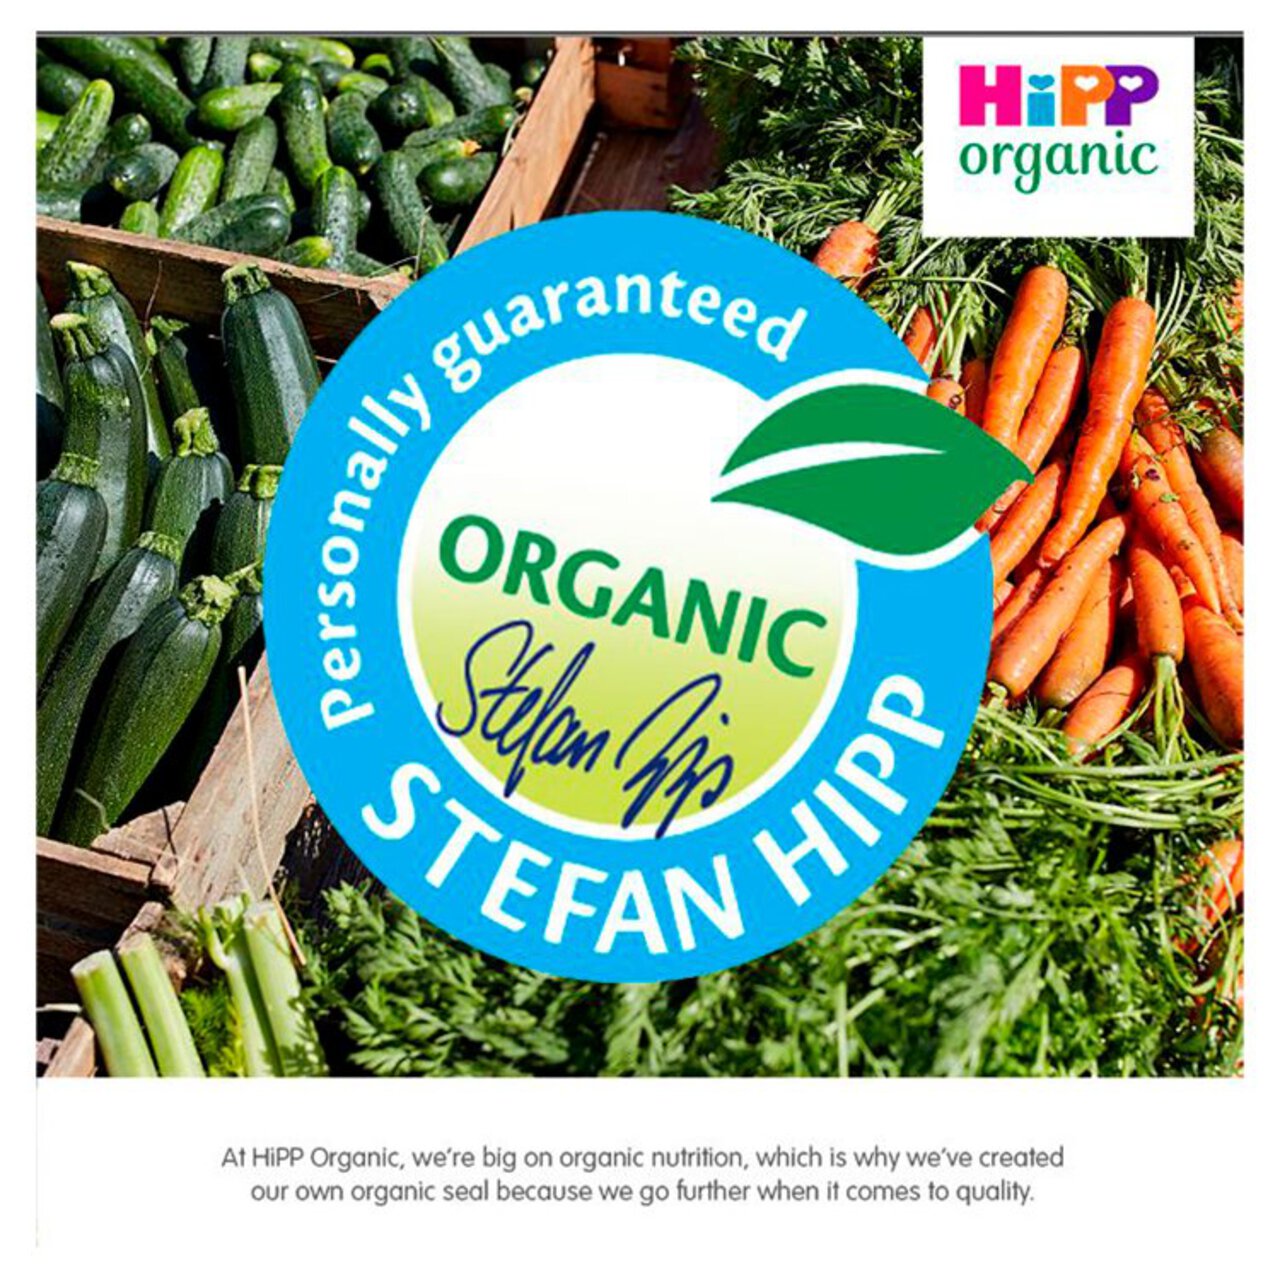 HiPP Organic Vegetable Lasagne Baby Food Jar 7+ Months 190g